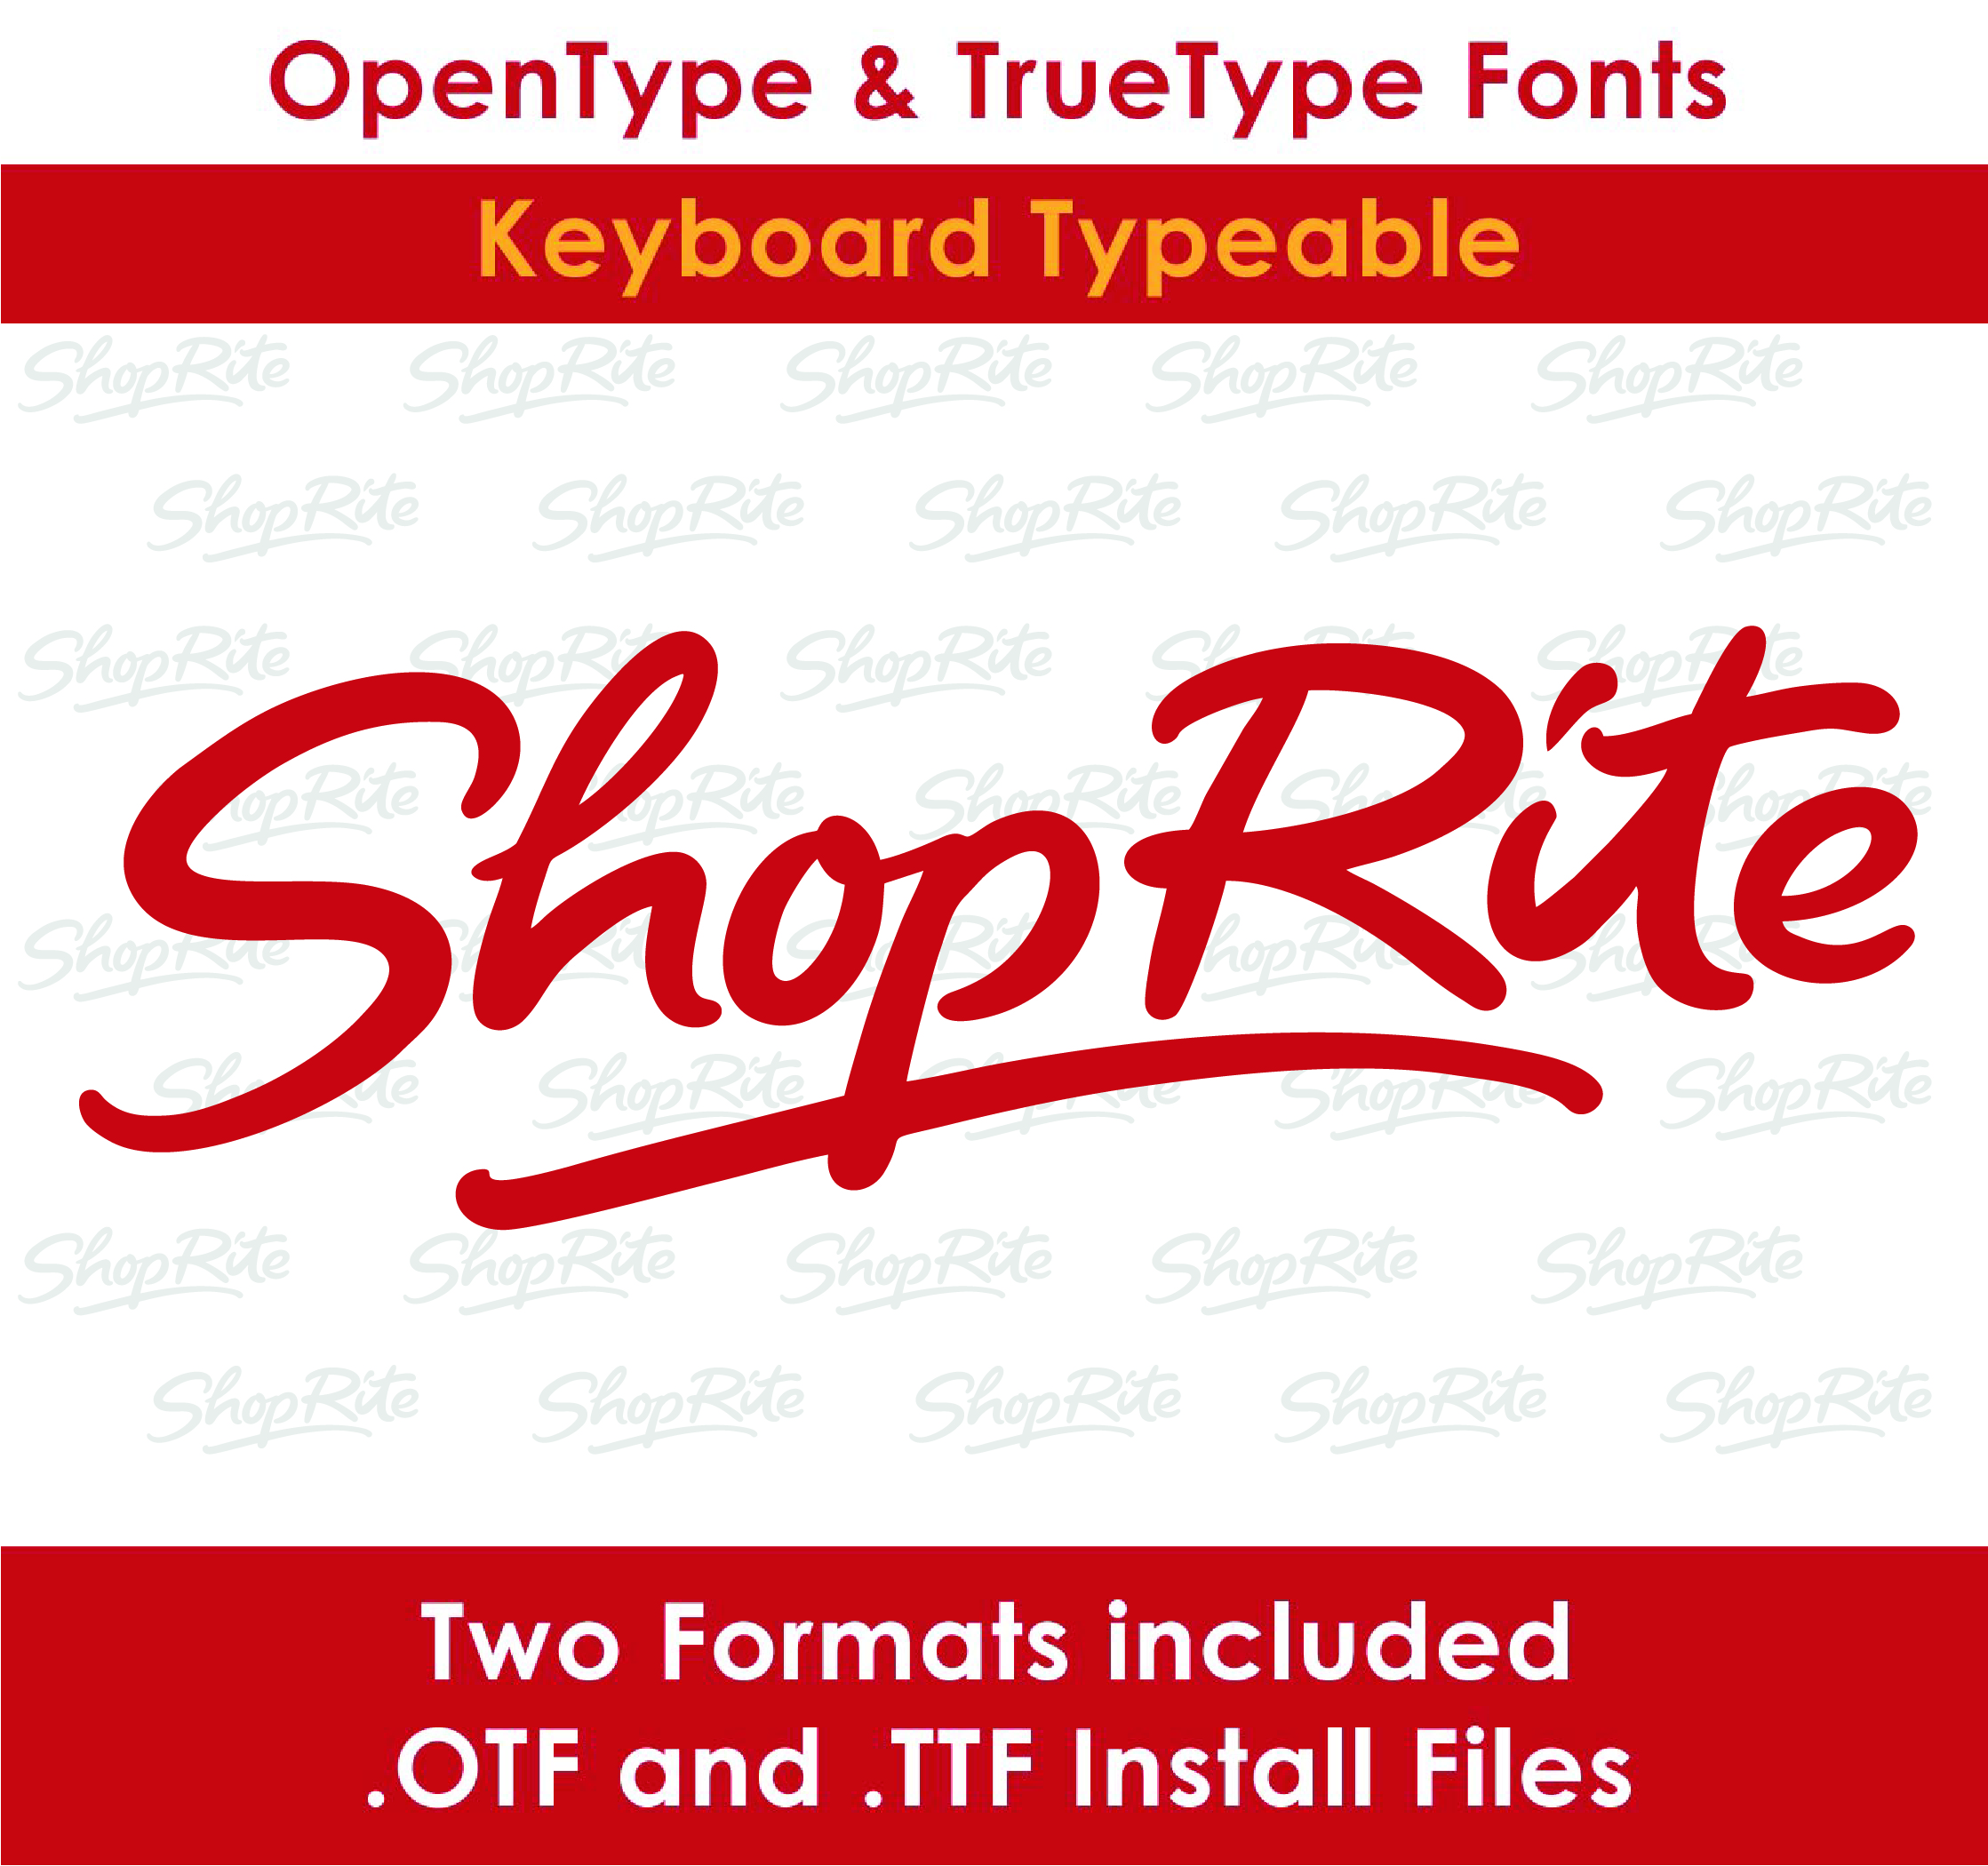 Shop Rite TrueType Font